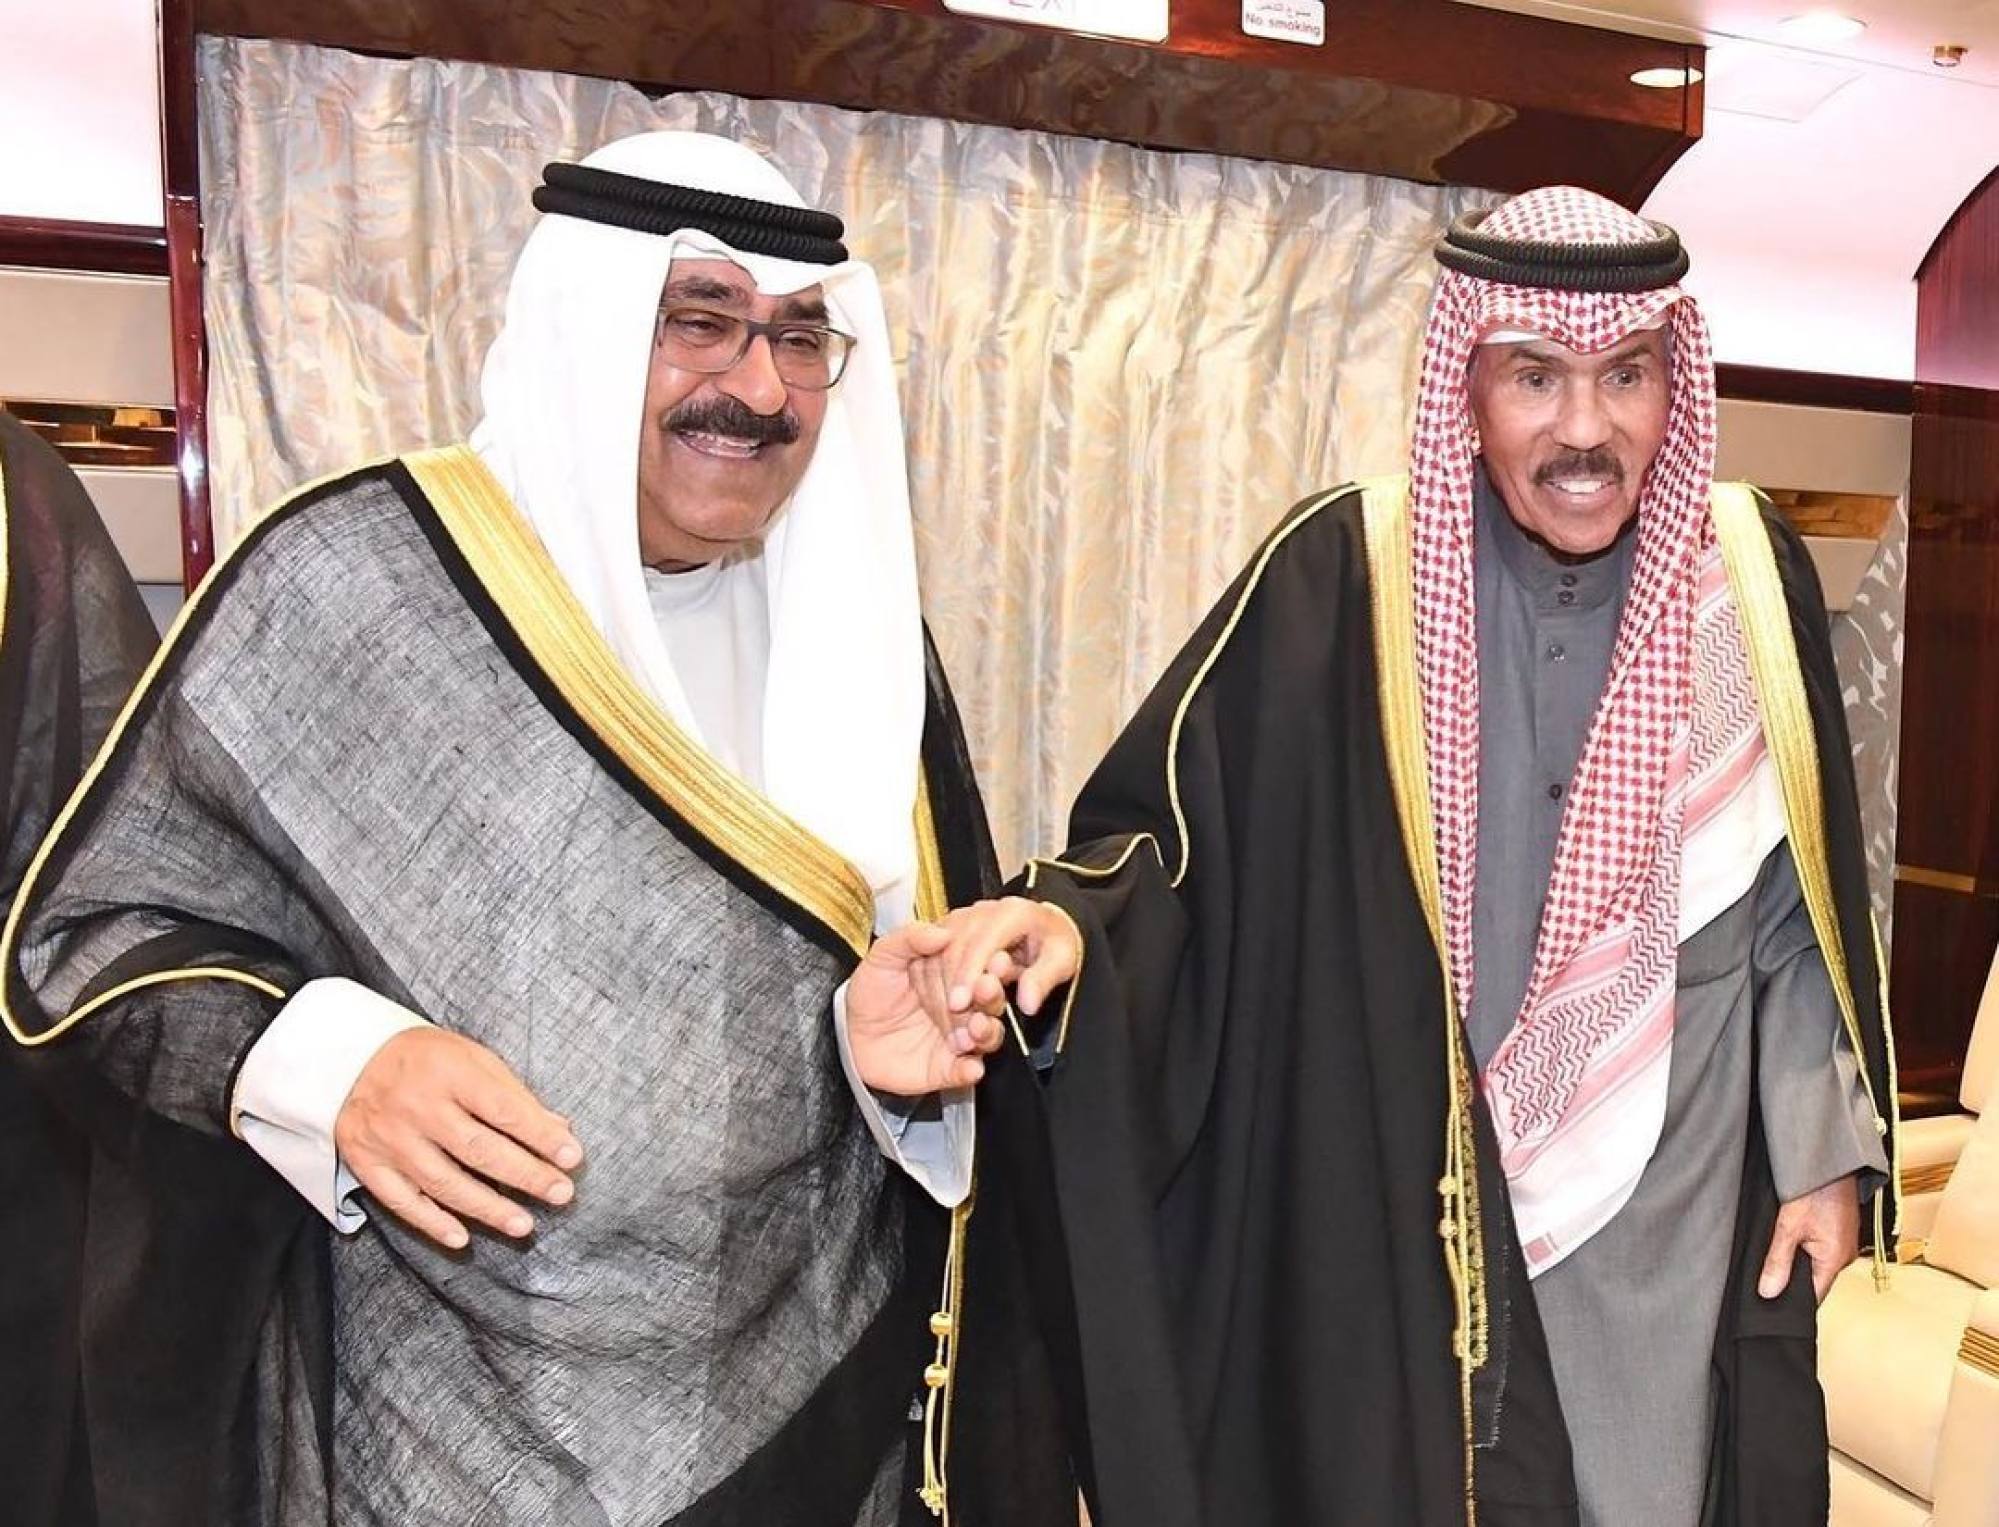 Shaikh Nawaf Ahmad Jaber Al-Sabah and Crown Prince Shaikh Mishaal Ahmad Jaber Al-Sabah have plenty to smile about. Photo: @kuwaitrulingfamily/Instagram